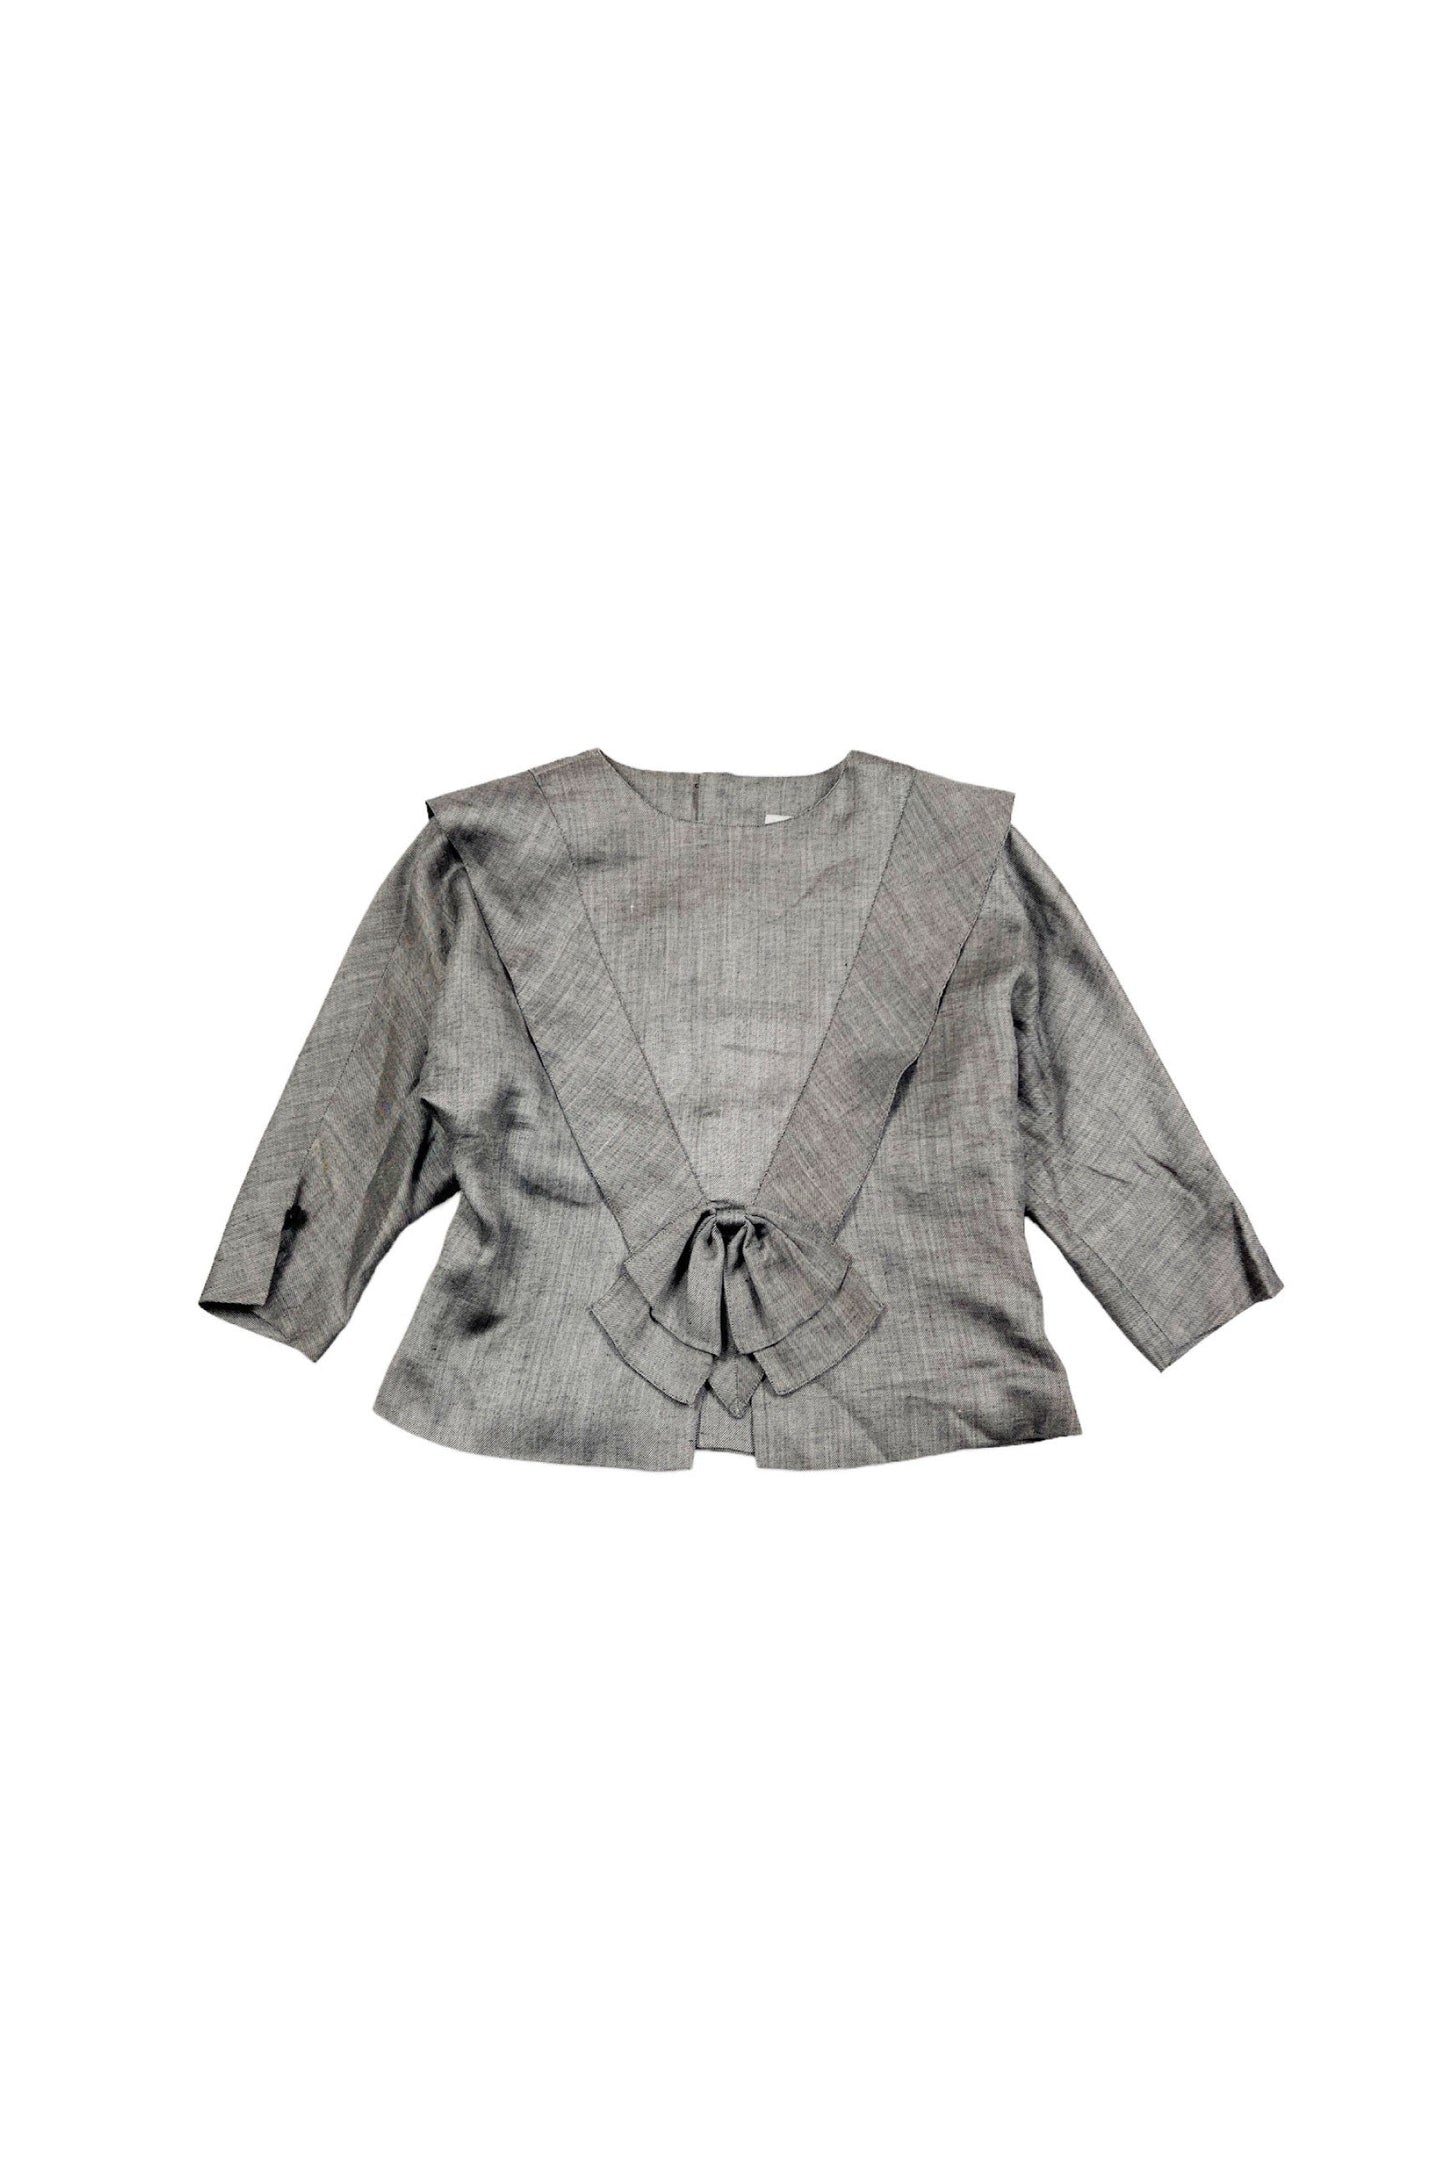 90's YUKI TORII blouse 